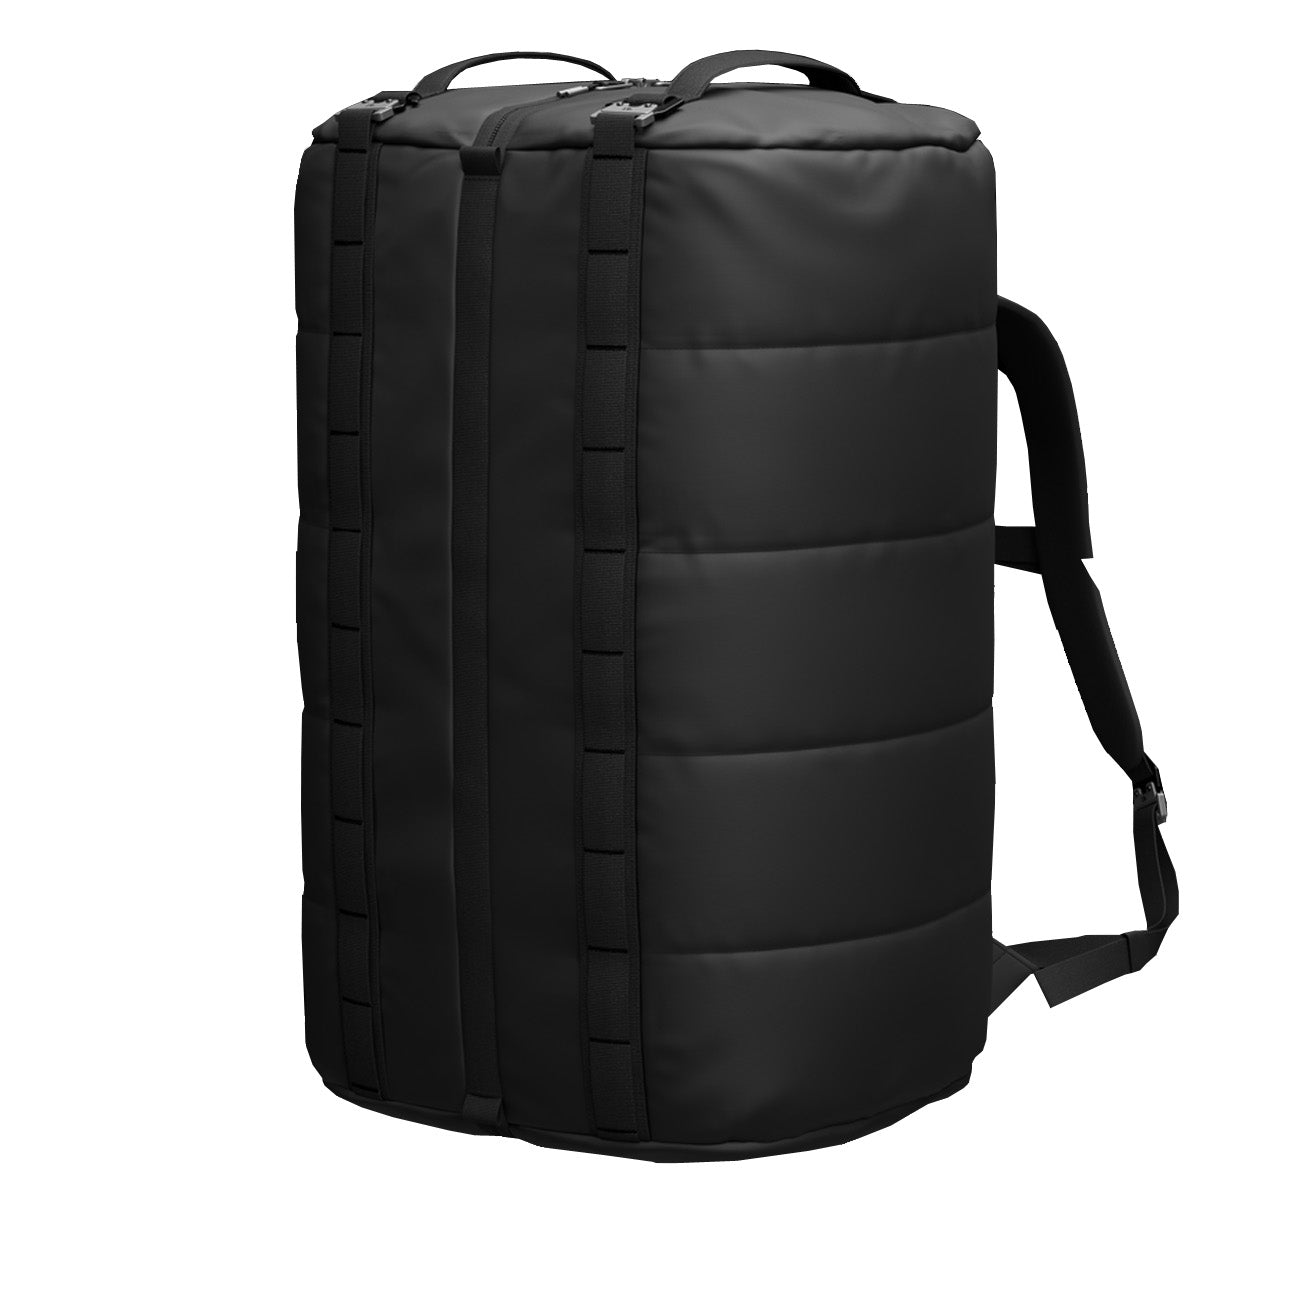 Db The Hytta 70L Split Duffel Bag Backpack Black Out